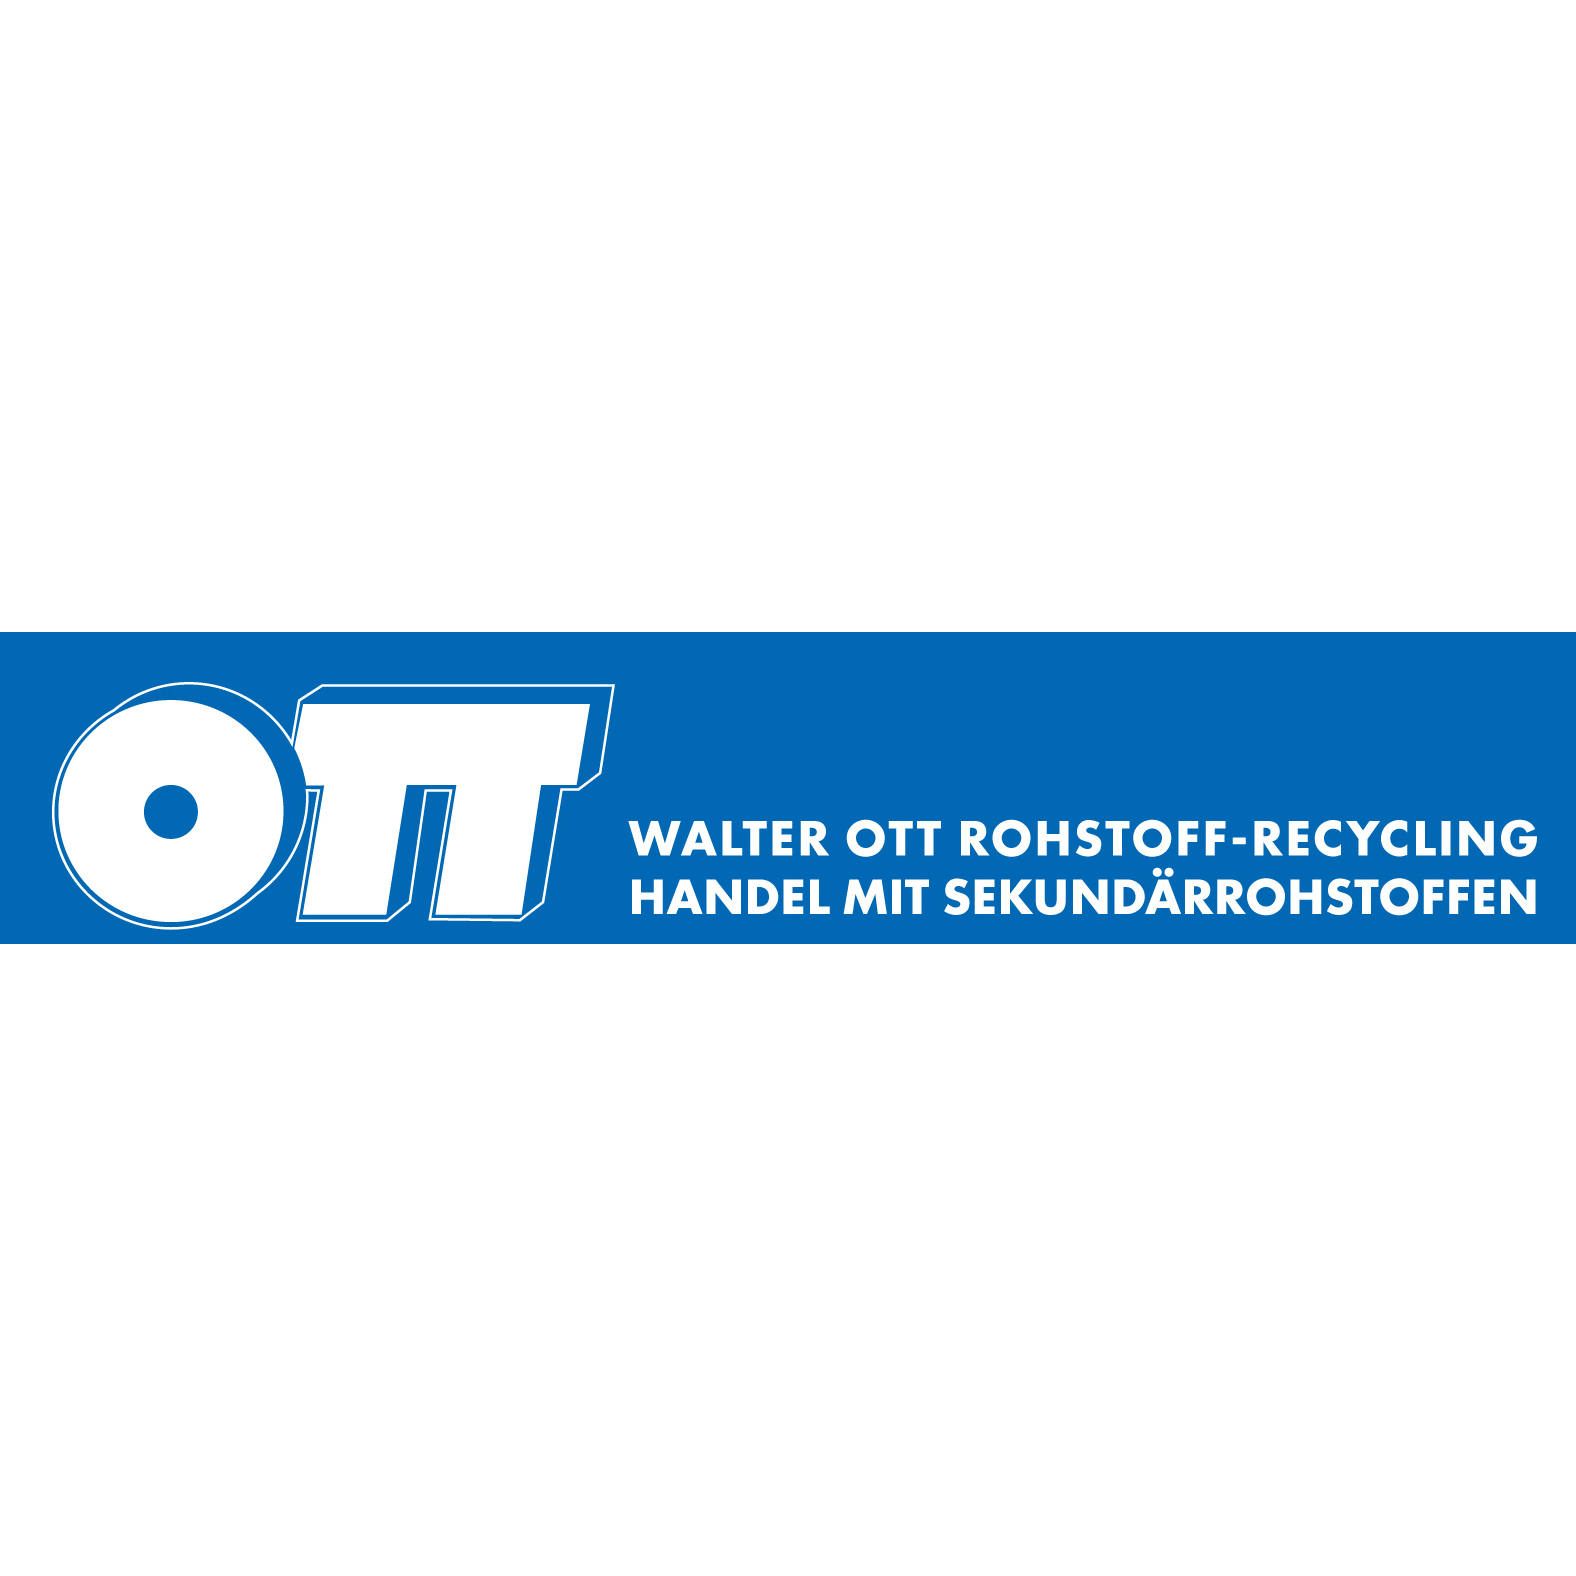 Walter Ott Rohstoff-Recycling GmbH & Co. KG  